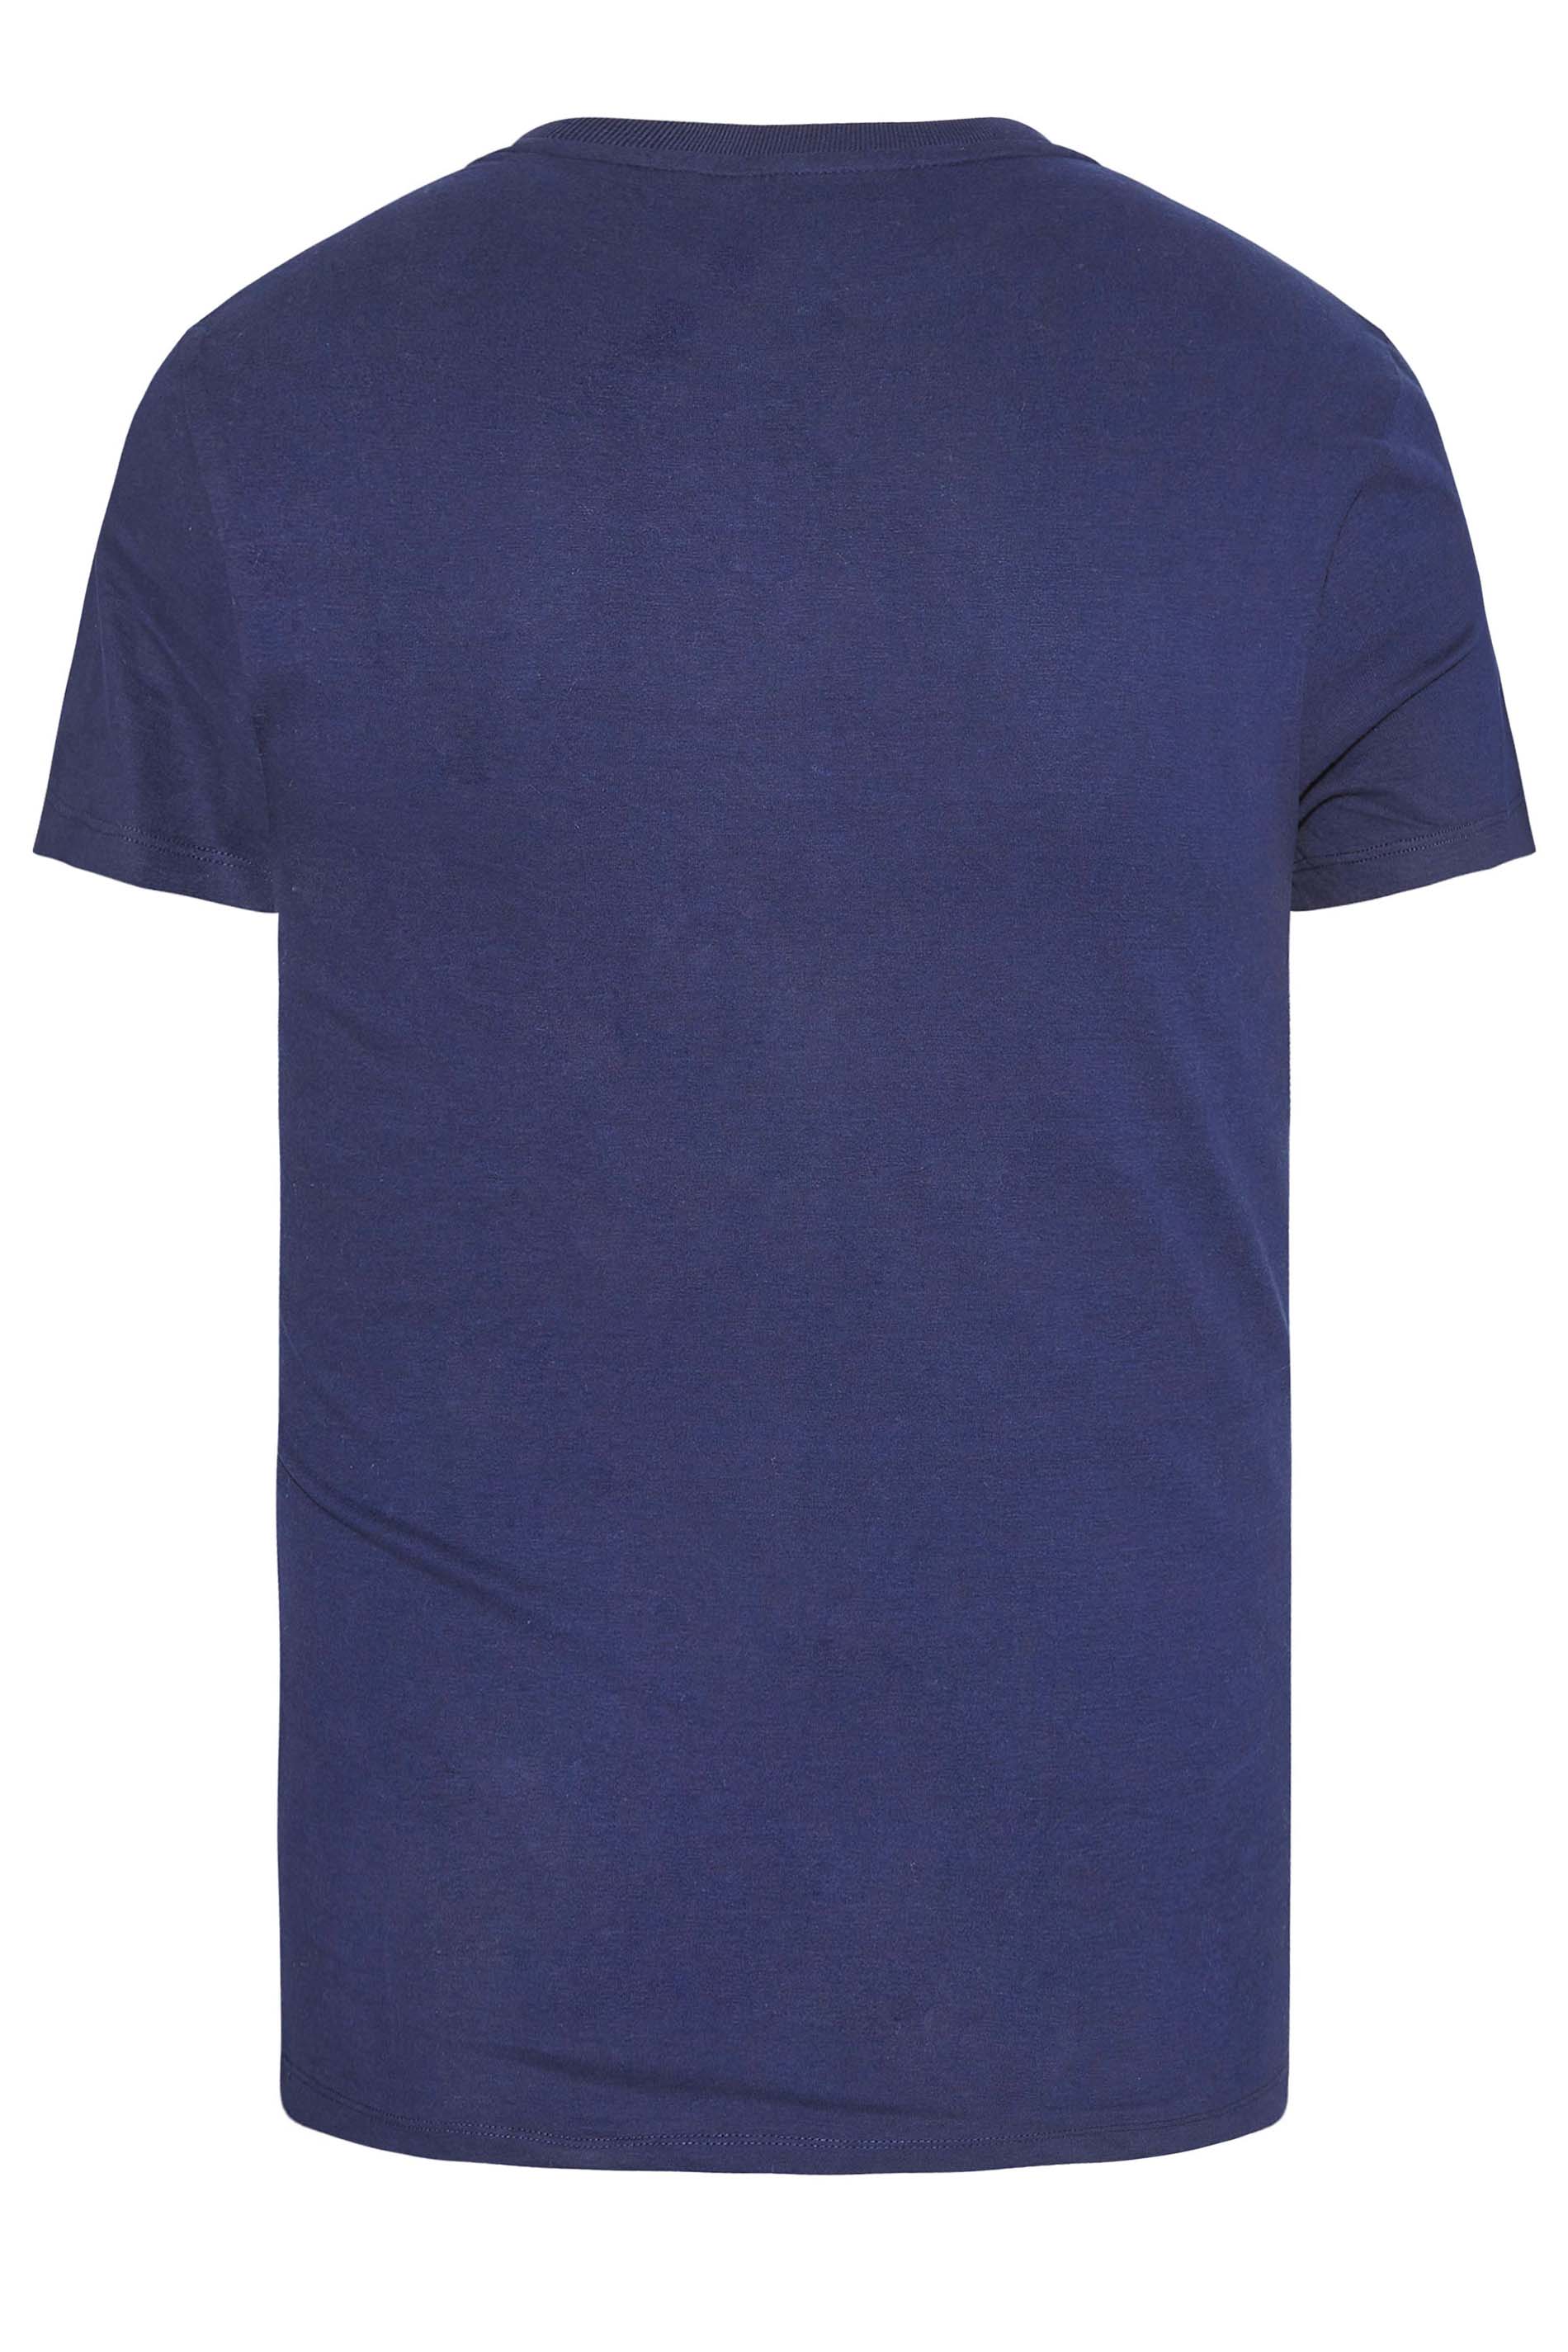 SUPERDRY Navy Blue Vintage T-Shirt | BadRhino 2